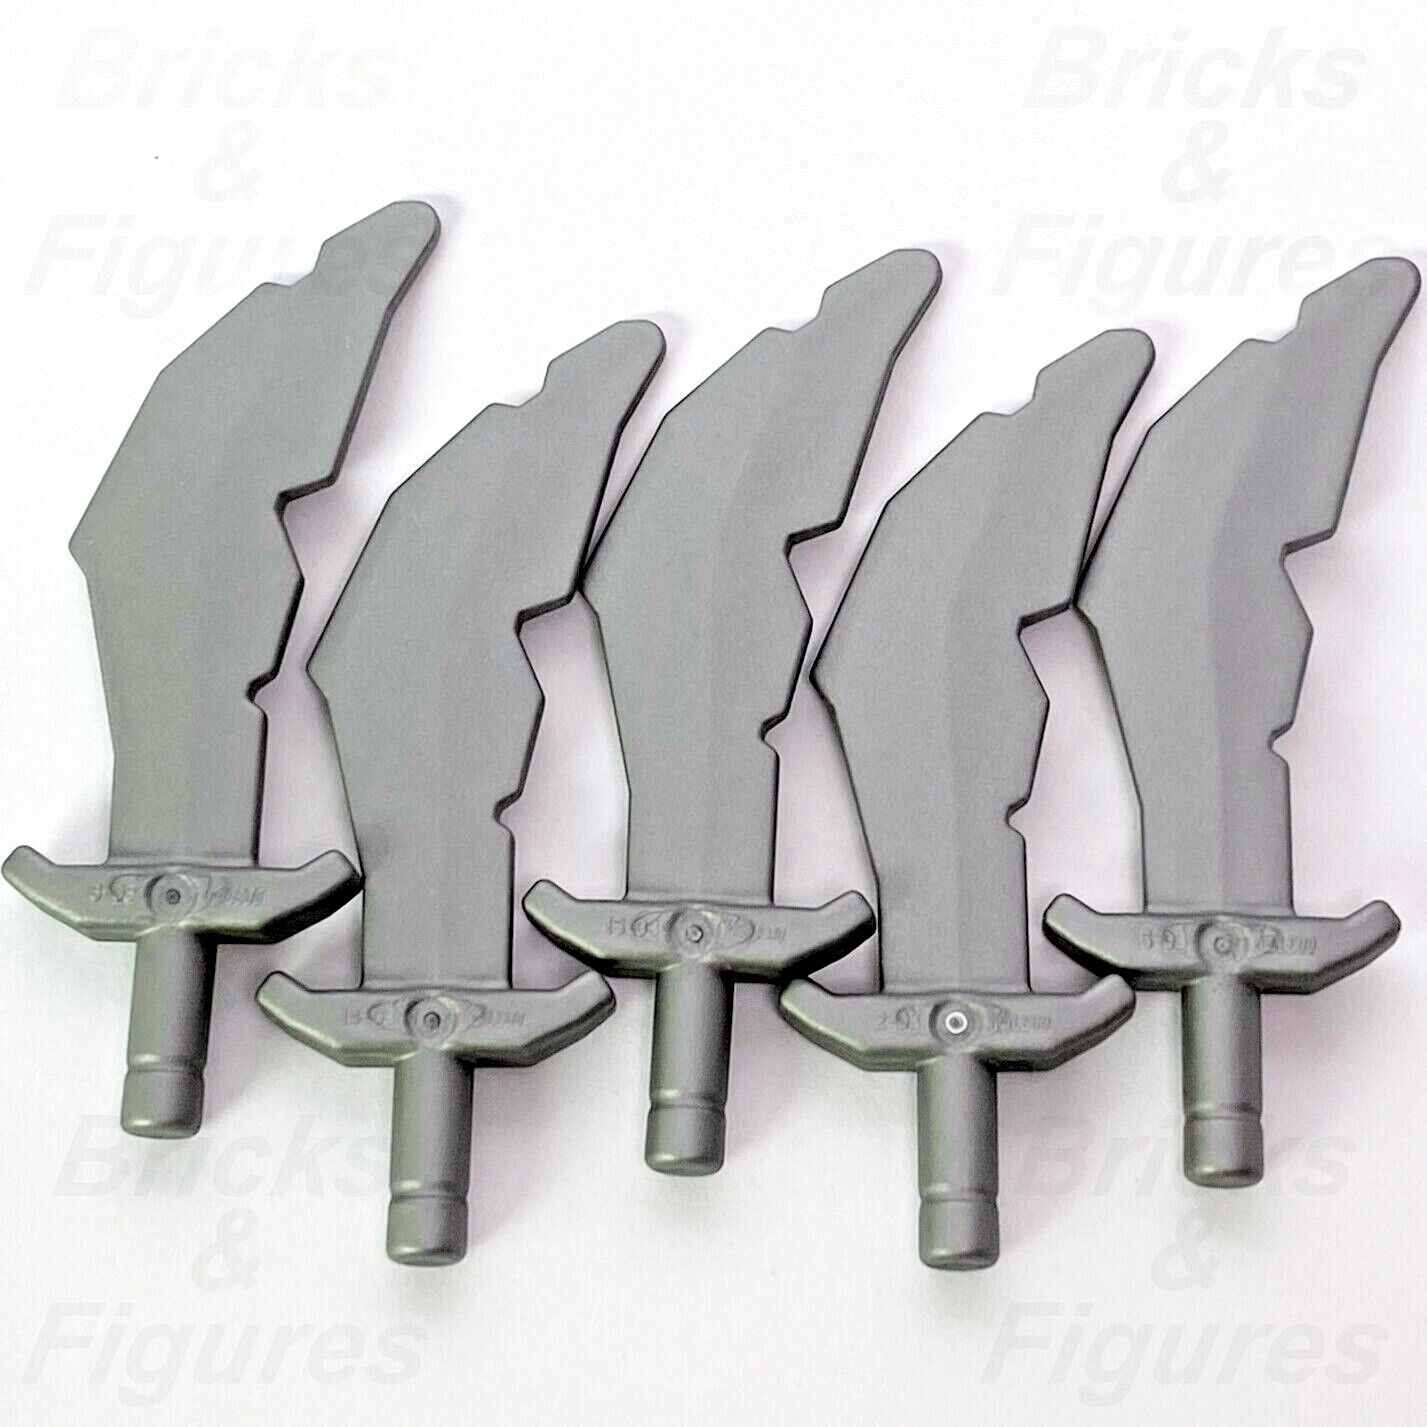 5 x LEGO Flat Silver Scimitar Swords Blades Minifigure Weapon Parts 60752 New - Bricks & Figures